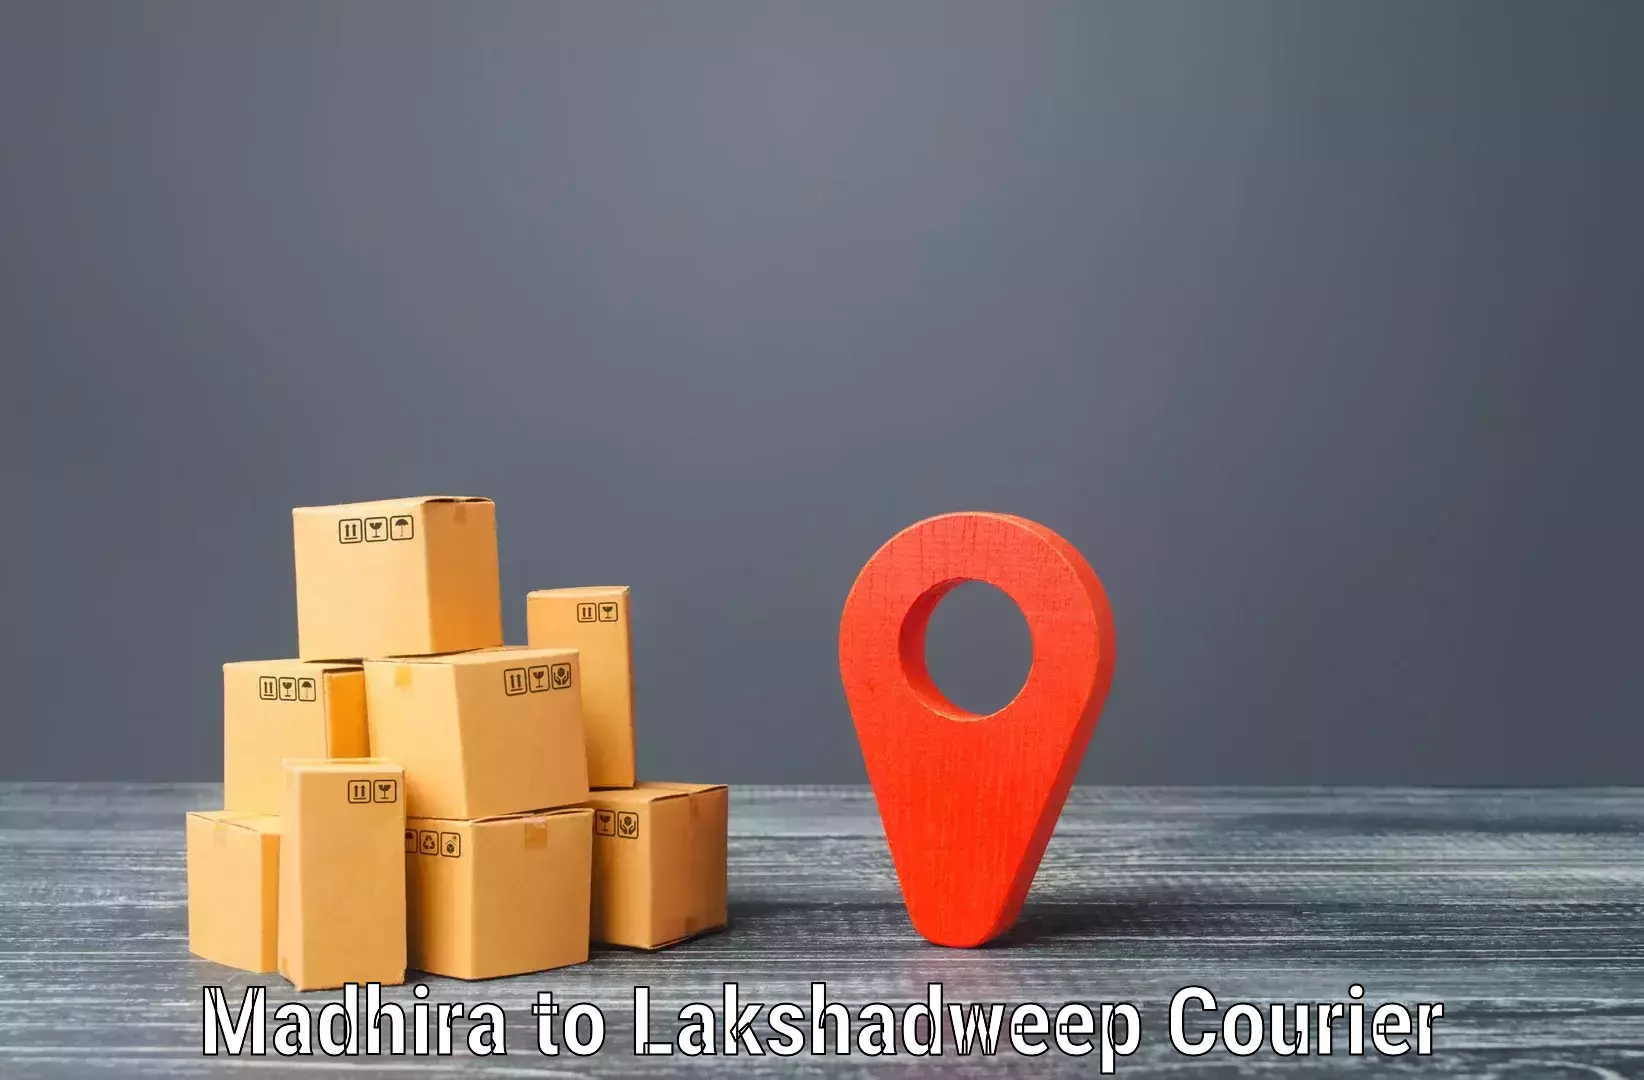 Courier service partnerships Madhira to Lakshadweep